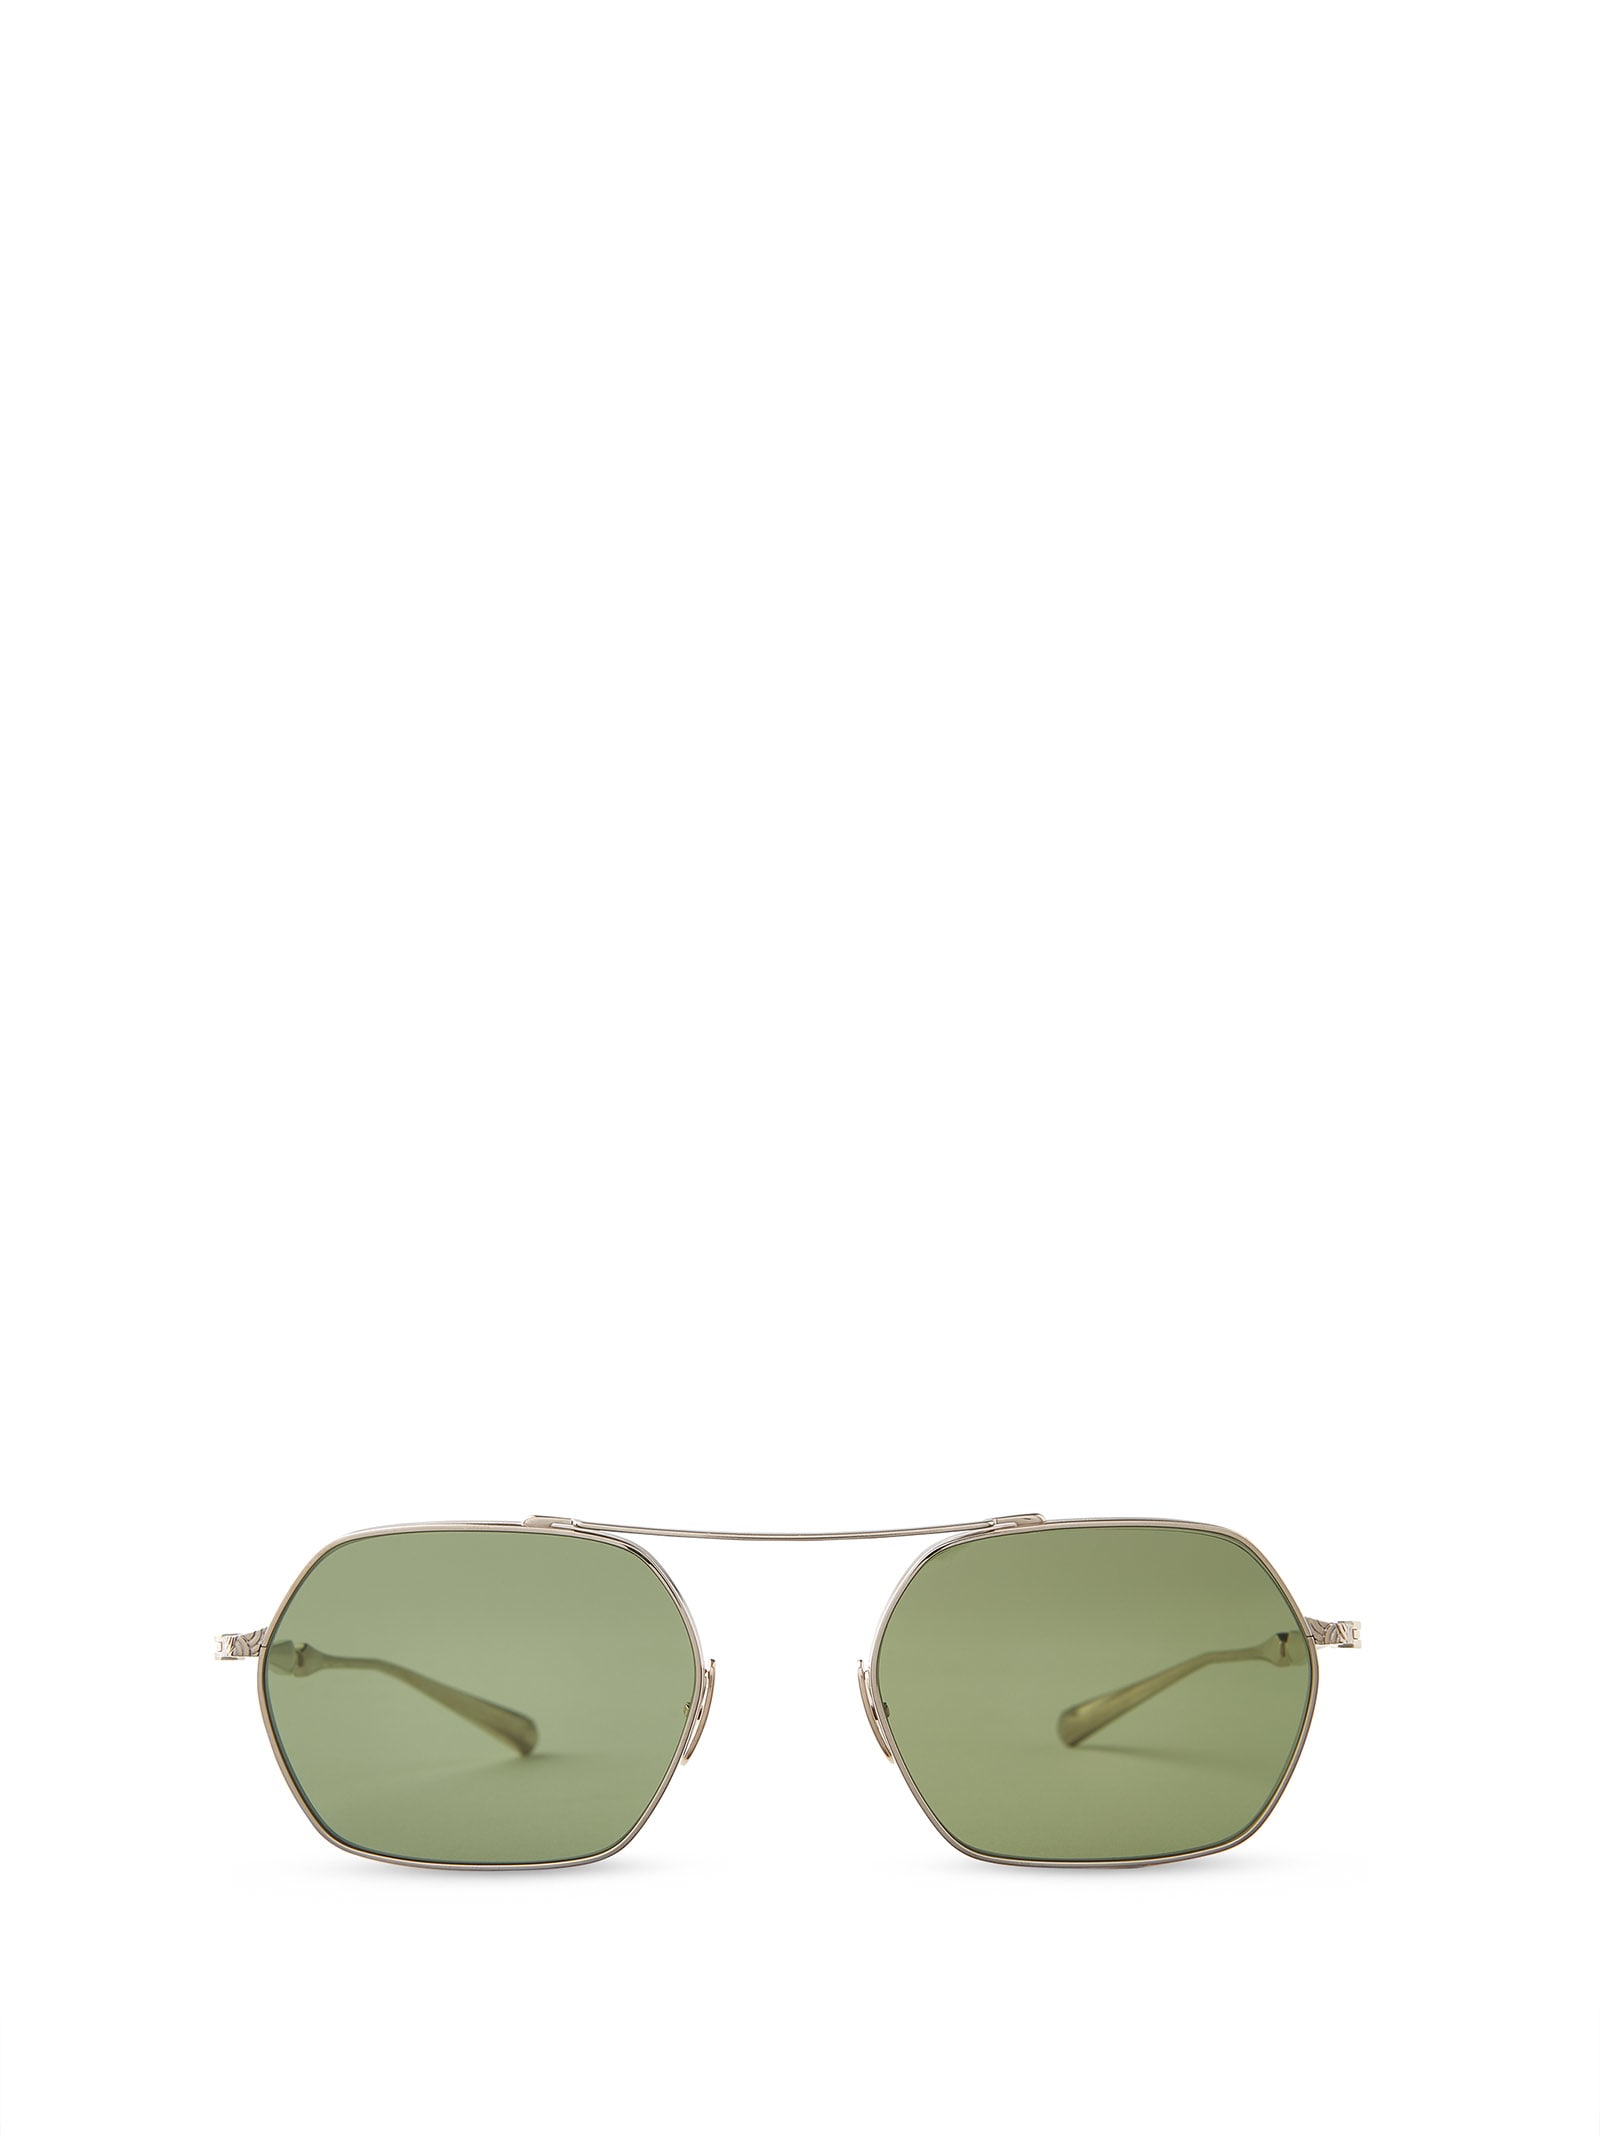 Ryder S Grey Gold Sunglasses